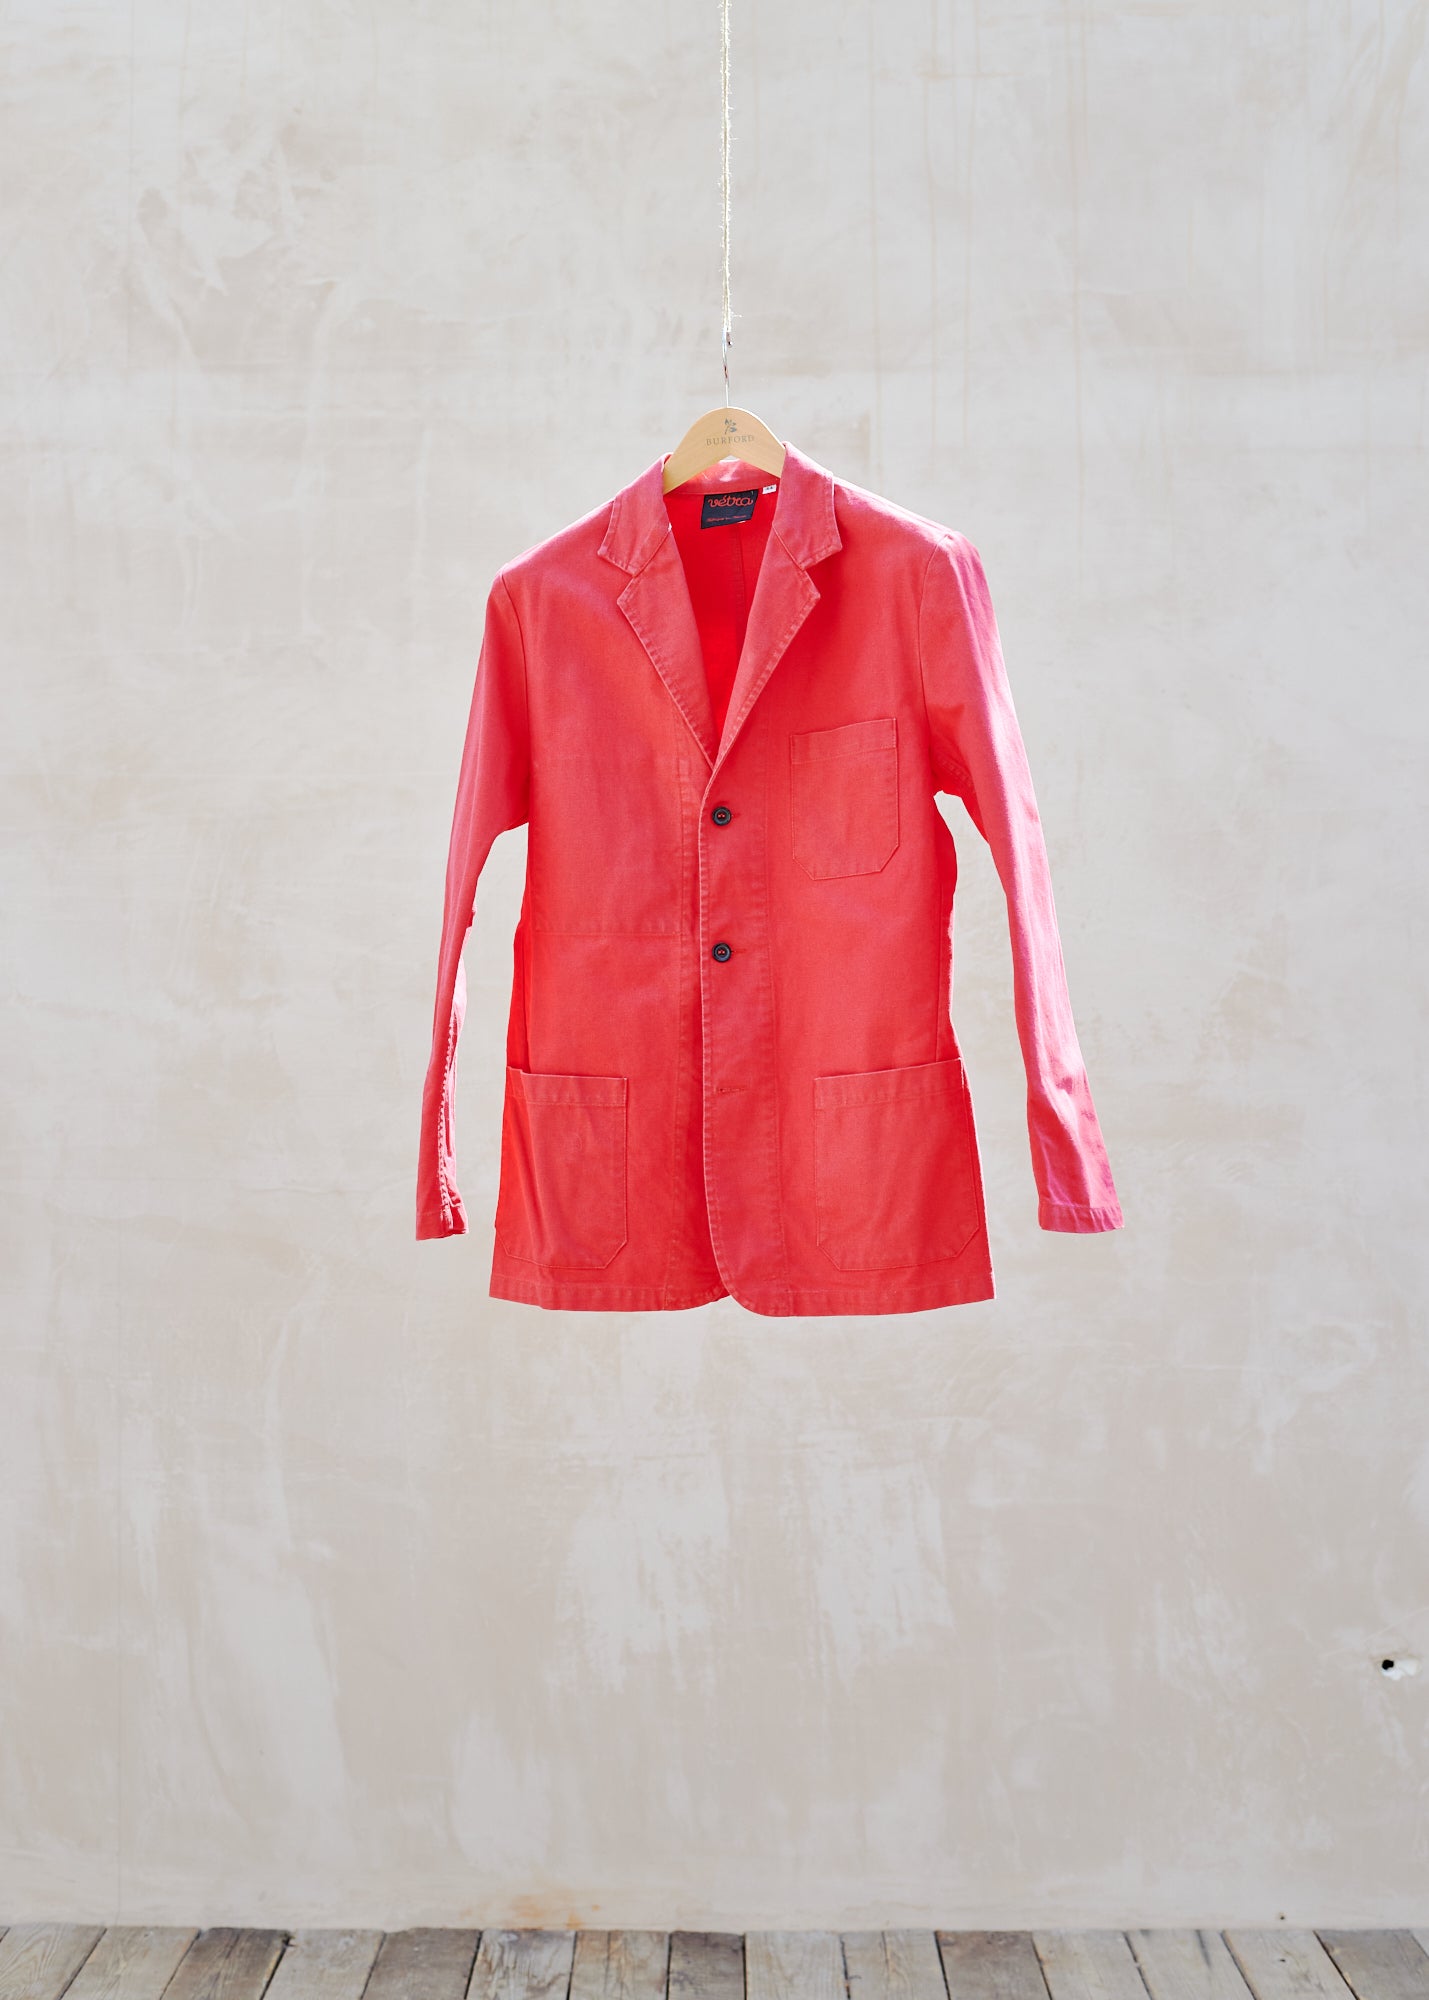 Vetra Bright Red Cotton Workwear Jacket - M/L